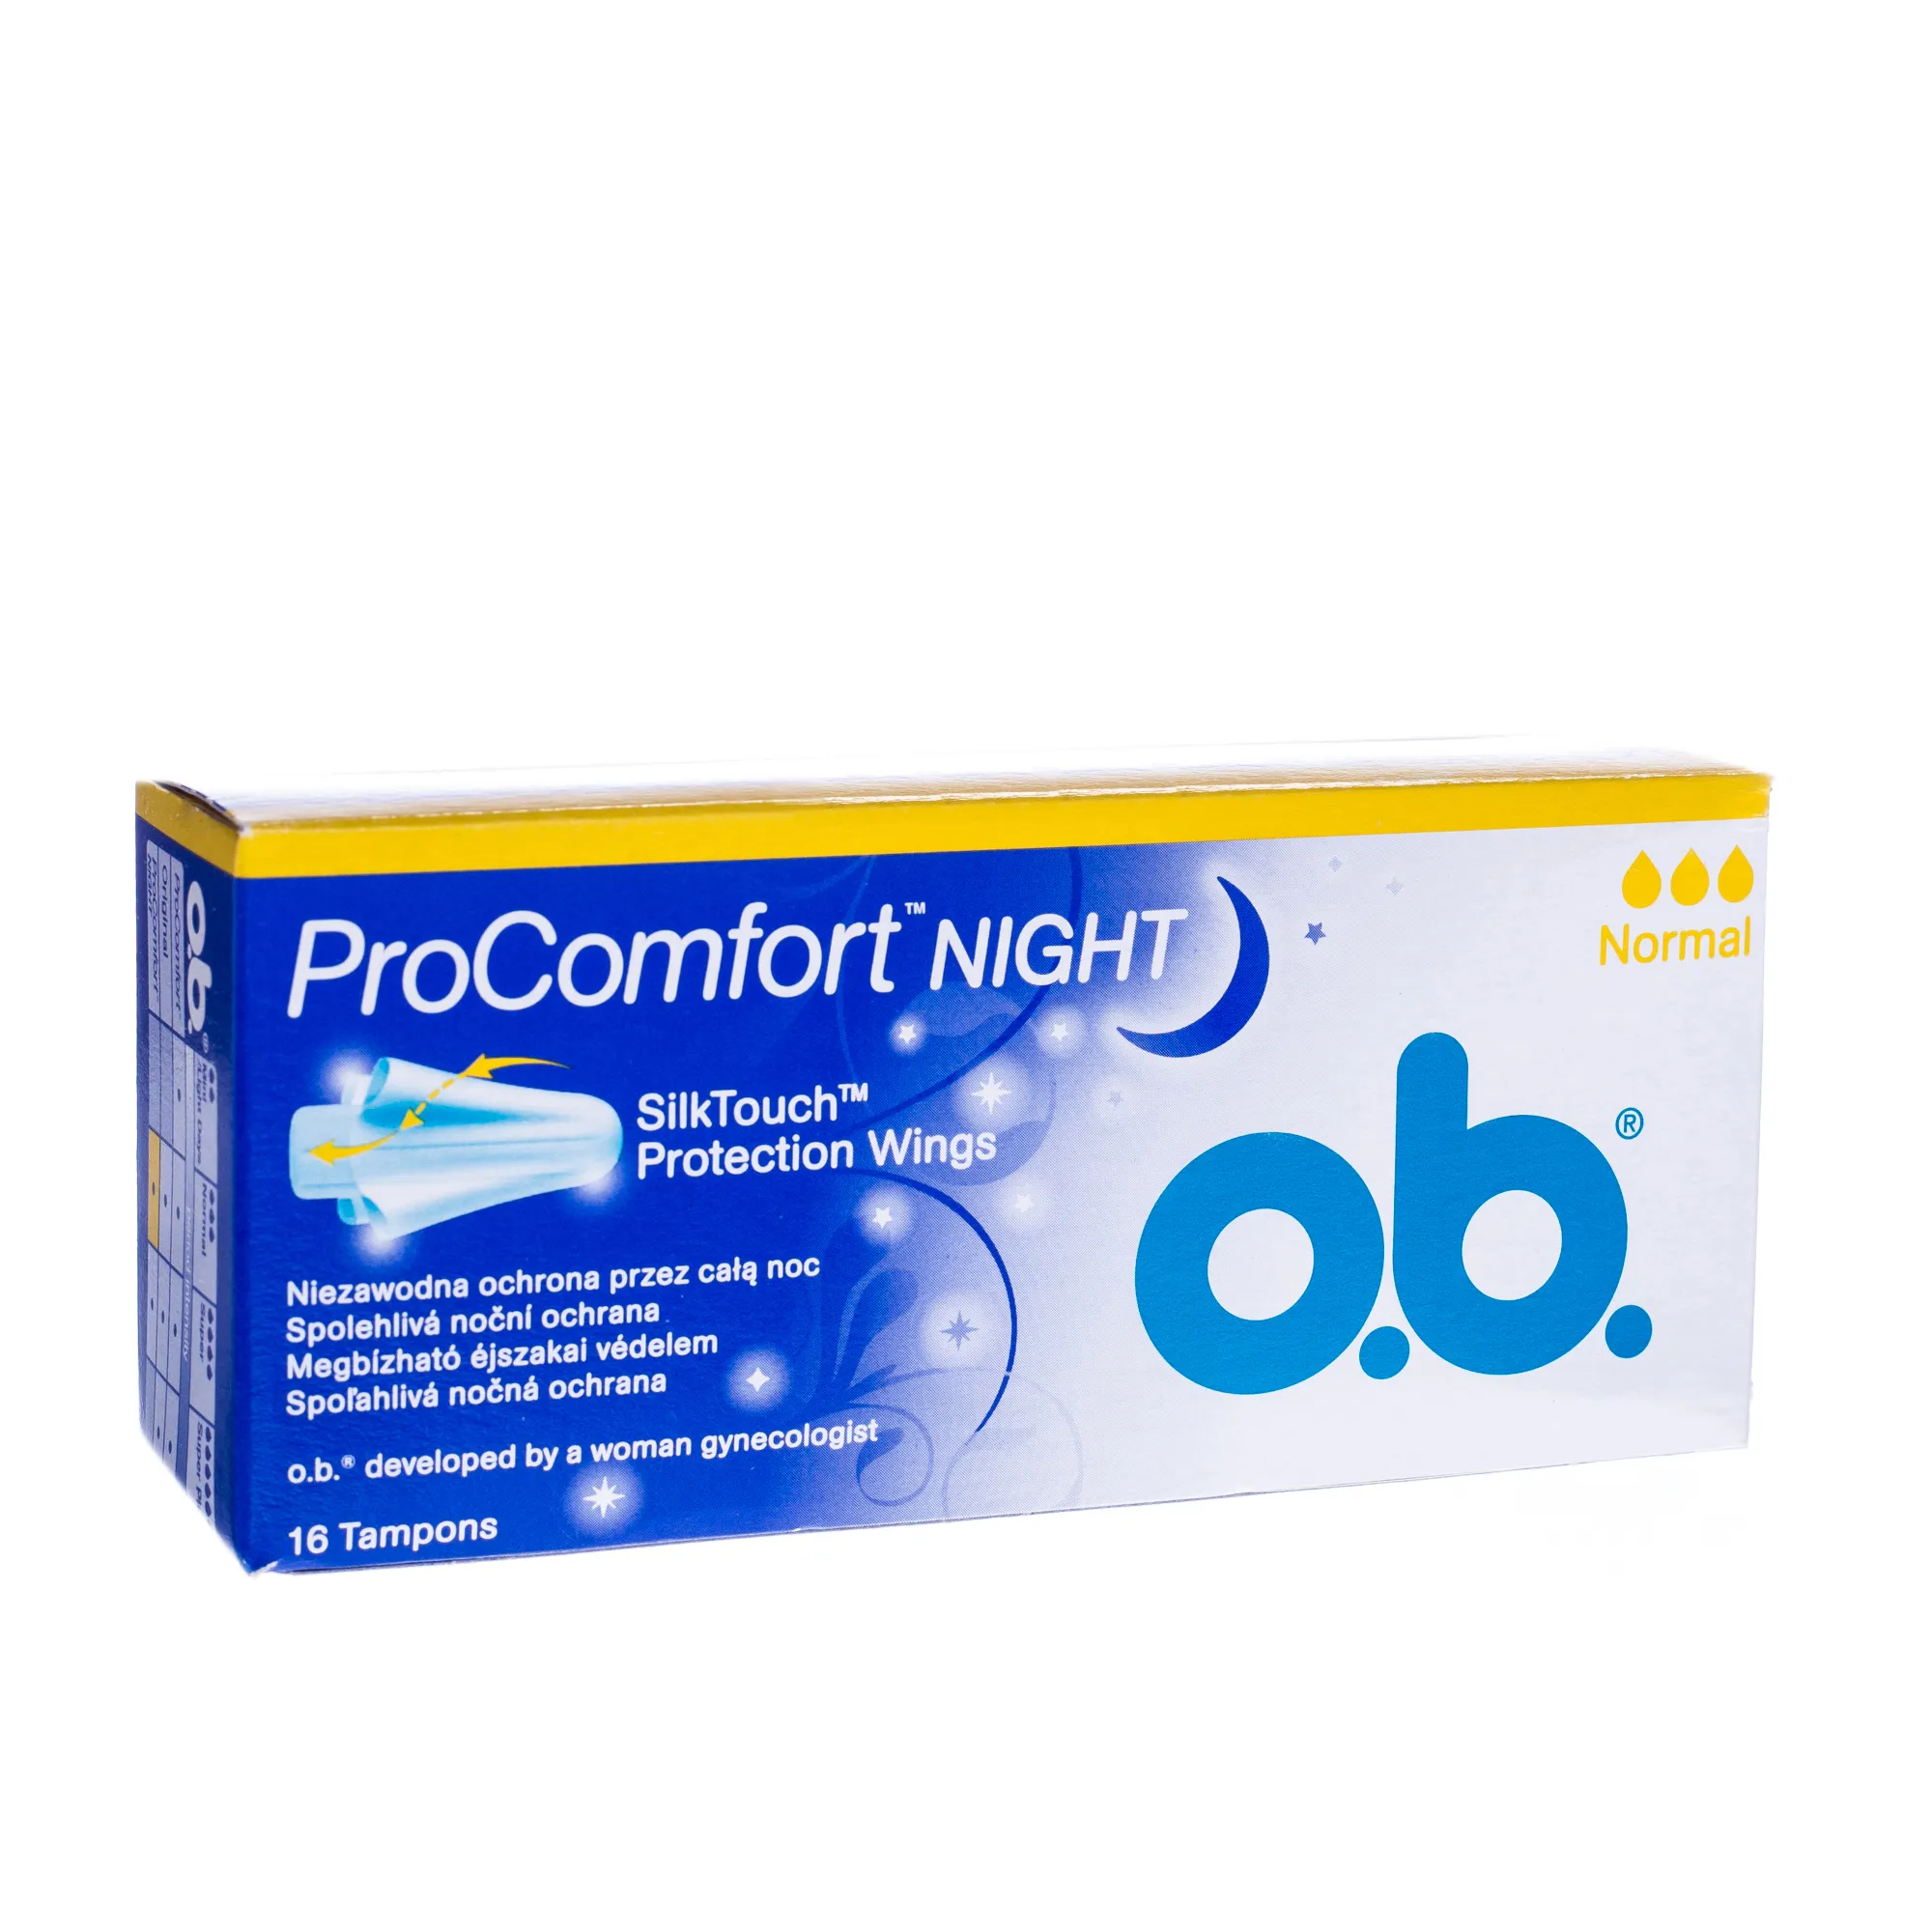 OB Procomfort Night Normal, tampony higieniczne, 16 sztuk 